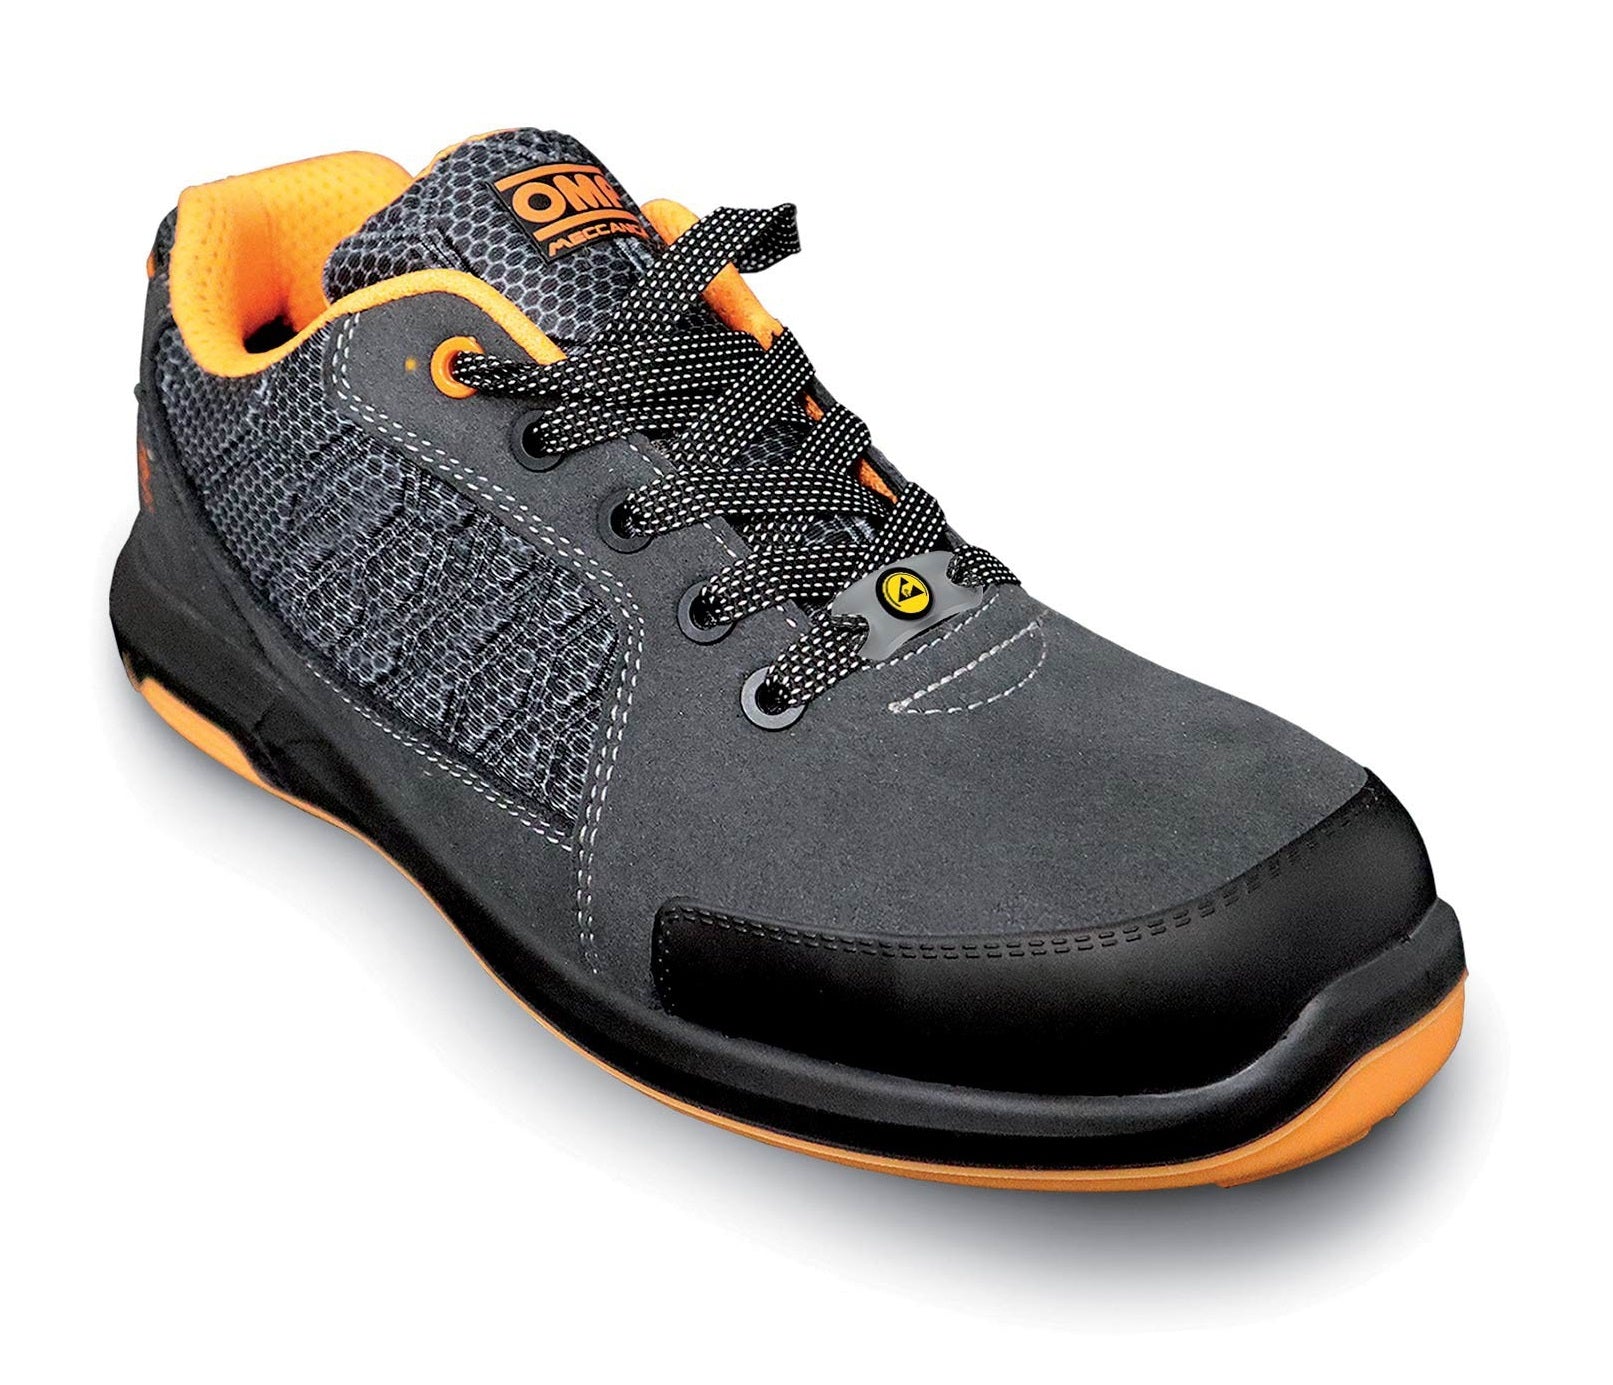 OMP OMPS90014120 Pro Sport Safety Mechanic's shoes, black/orange, size 41 Photo-0 